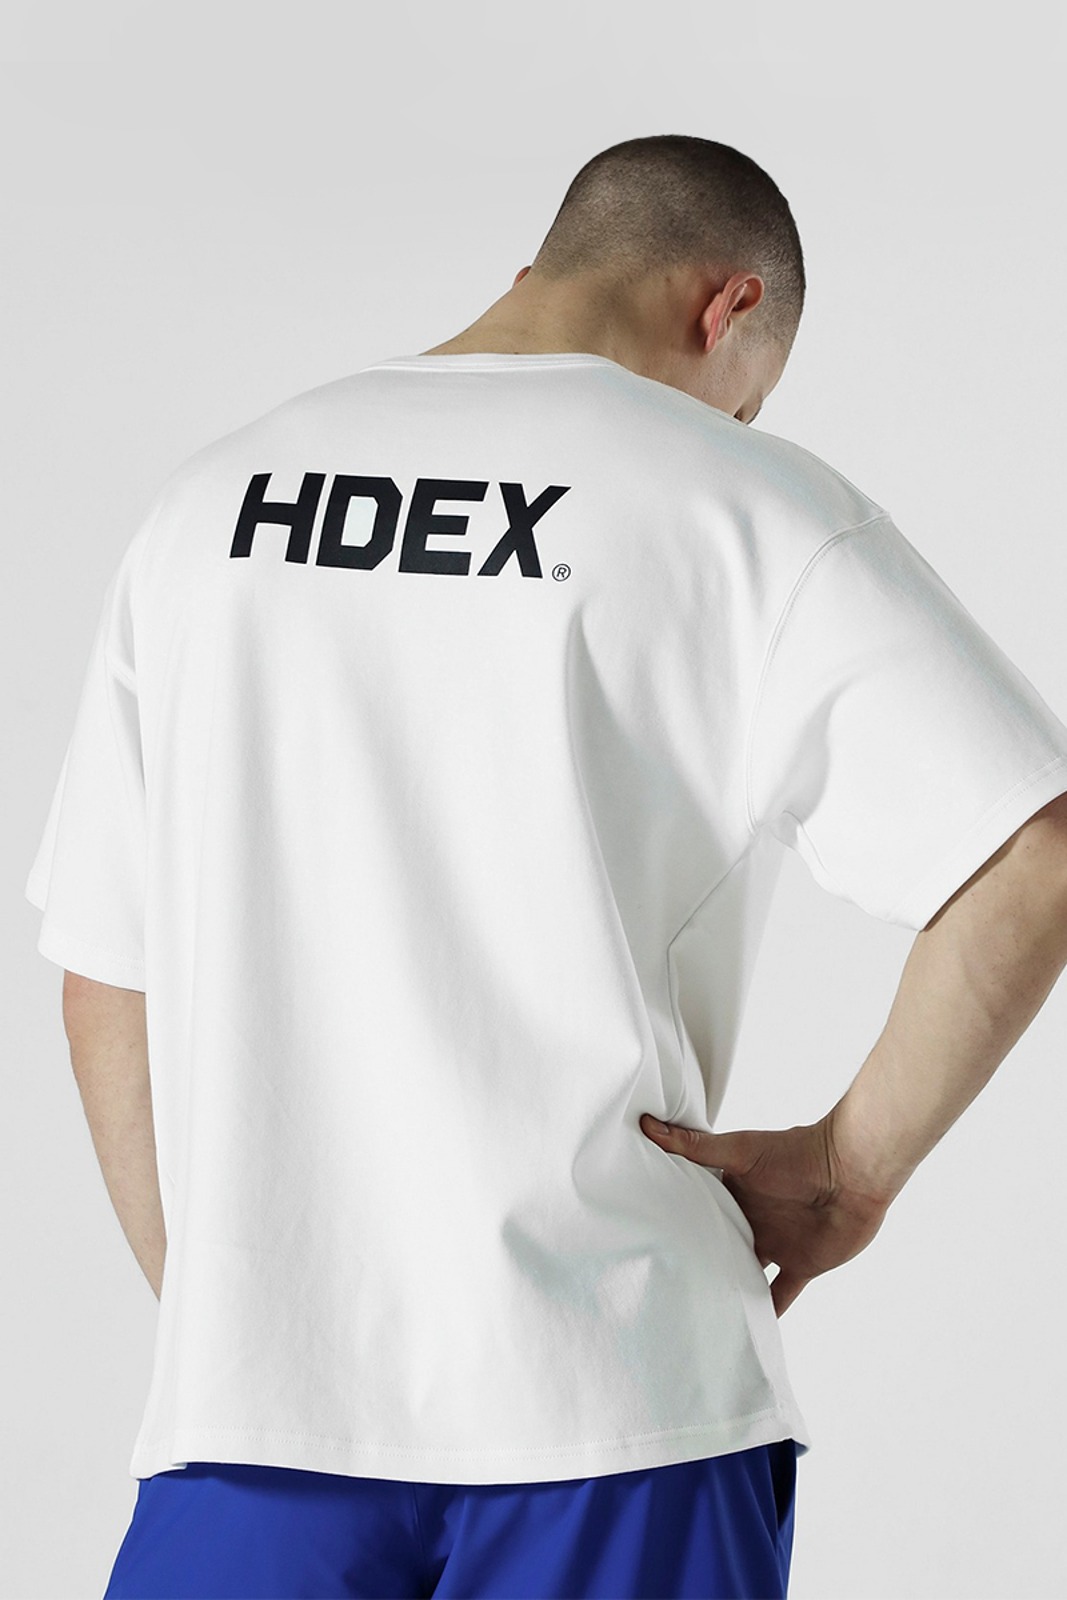 HDEX, 메인 백로고 오버핏 반팔티 2 color